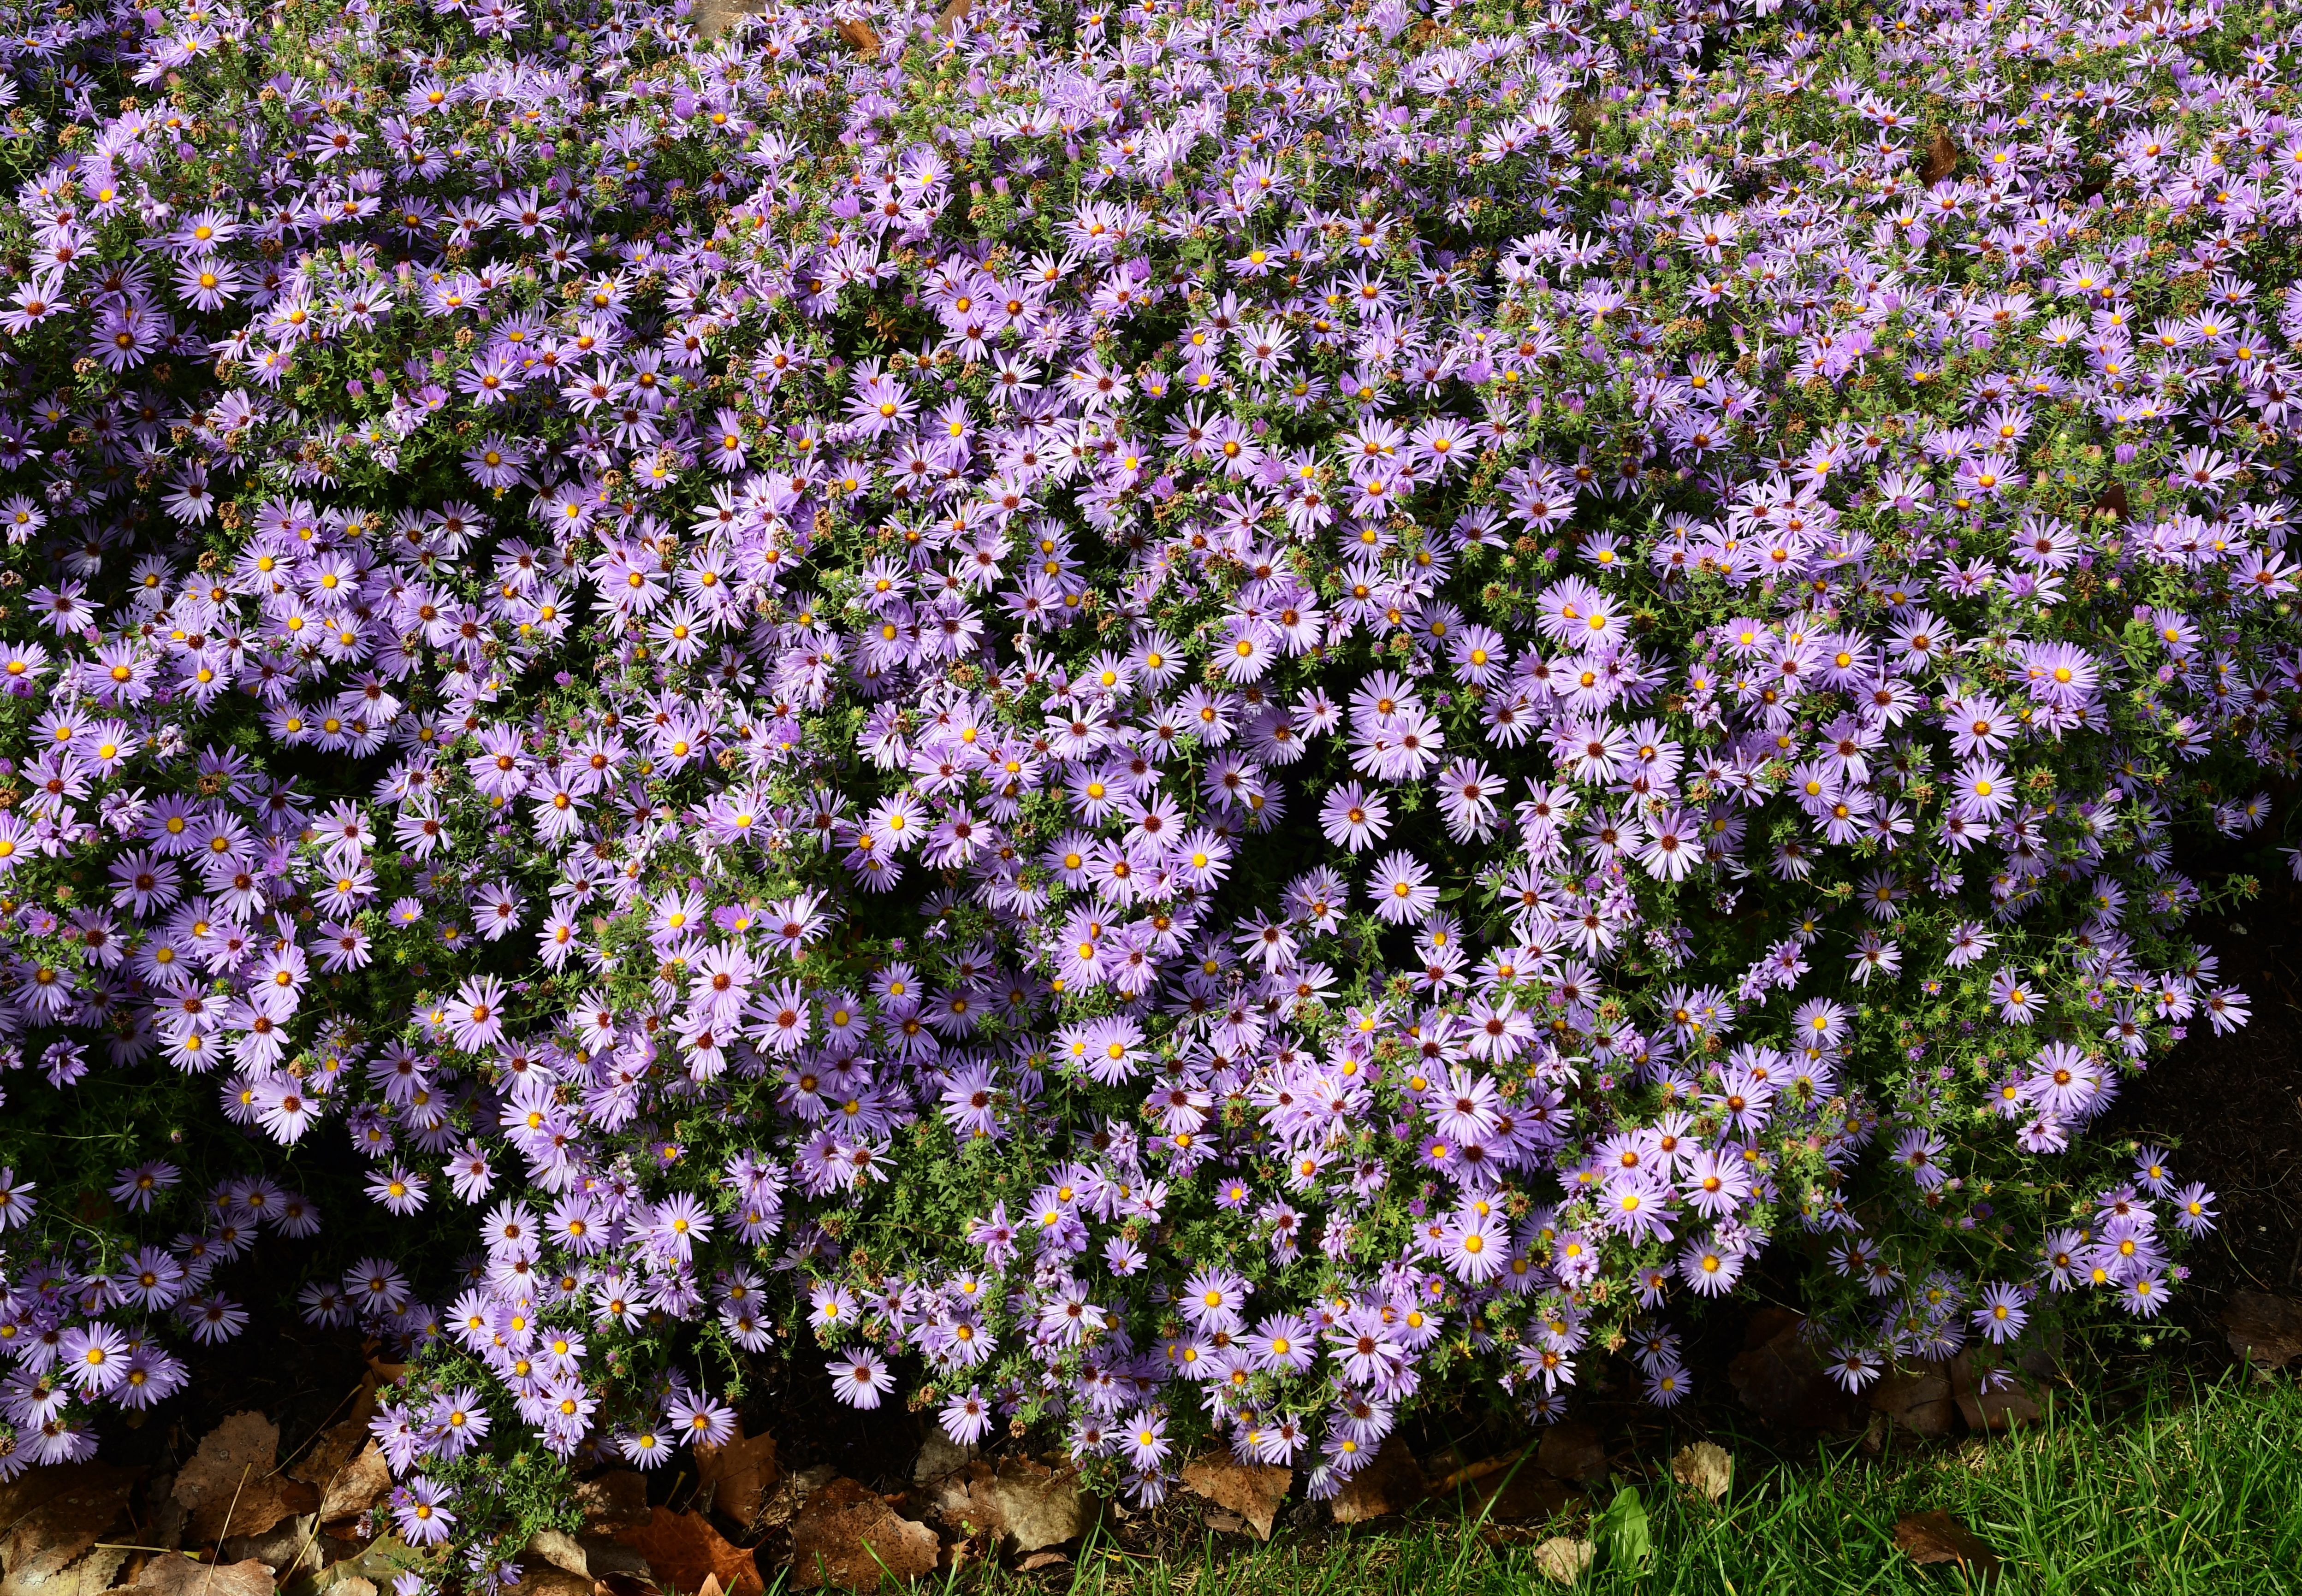 images/plants/aster/ast-billowing-violet/ast-billowing-violet-0005.jpg